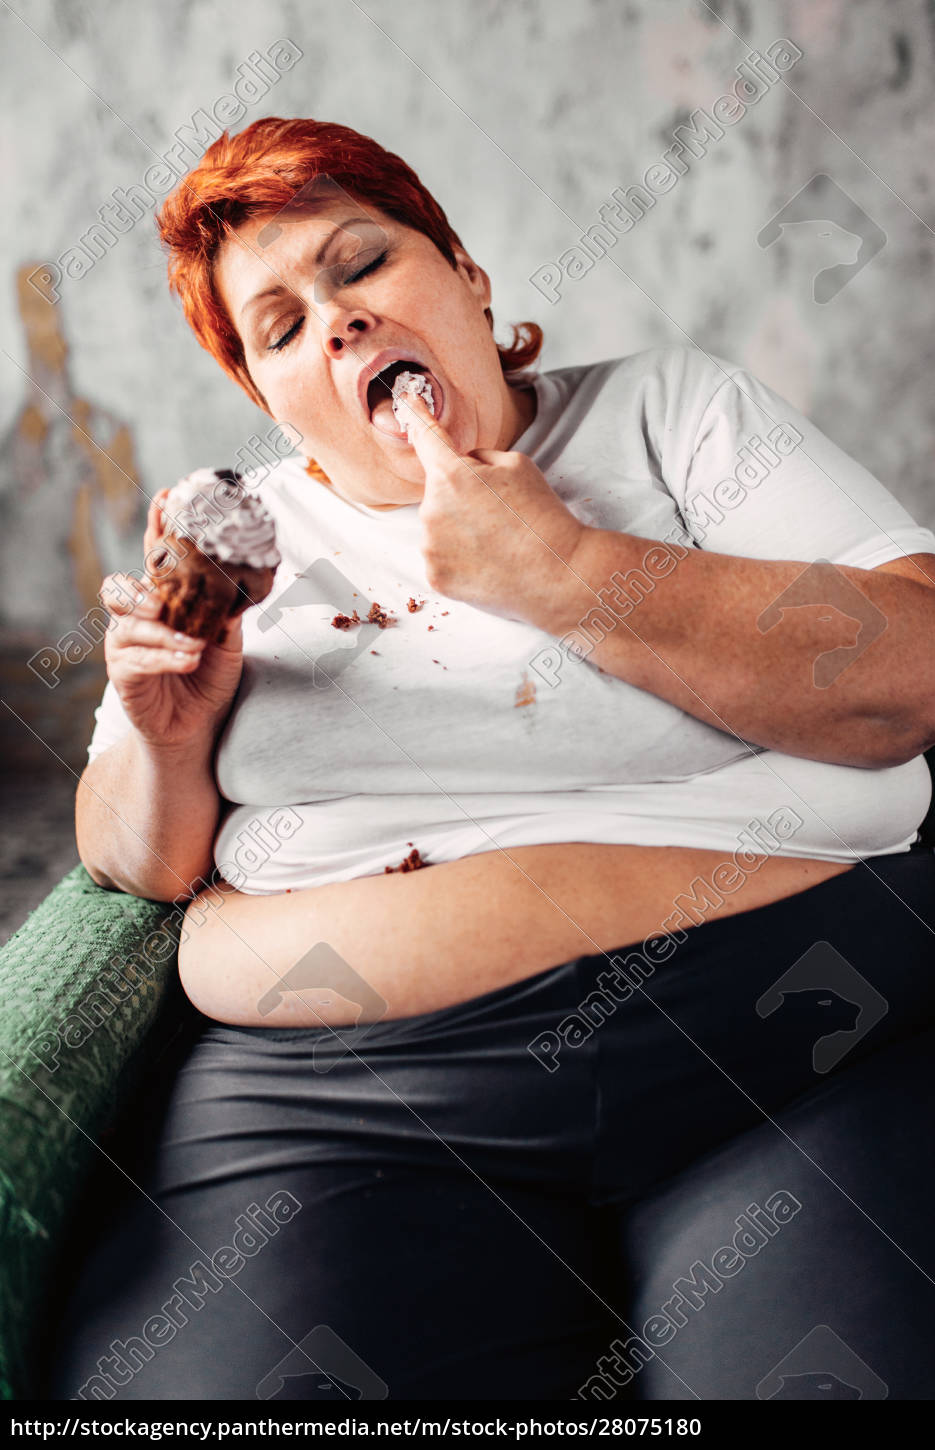 alex smeeth share fat girls eating cake photos